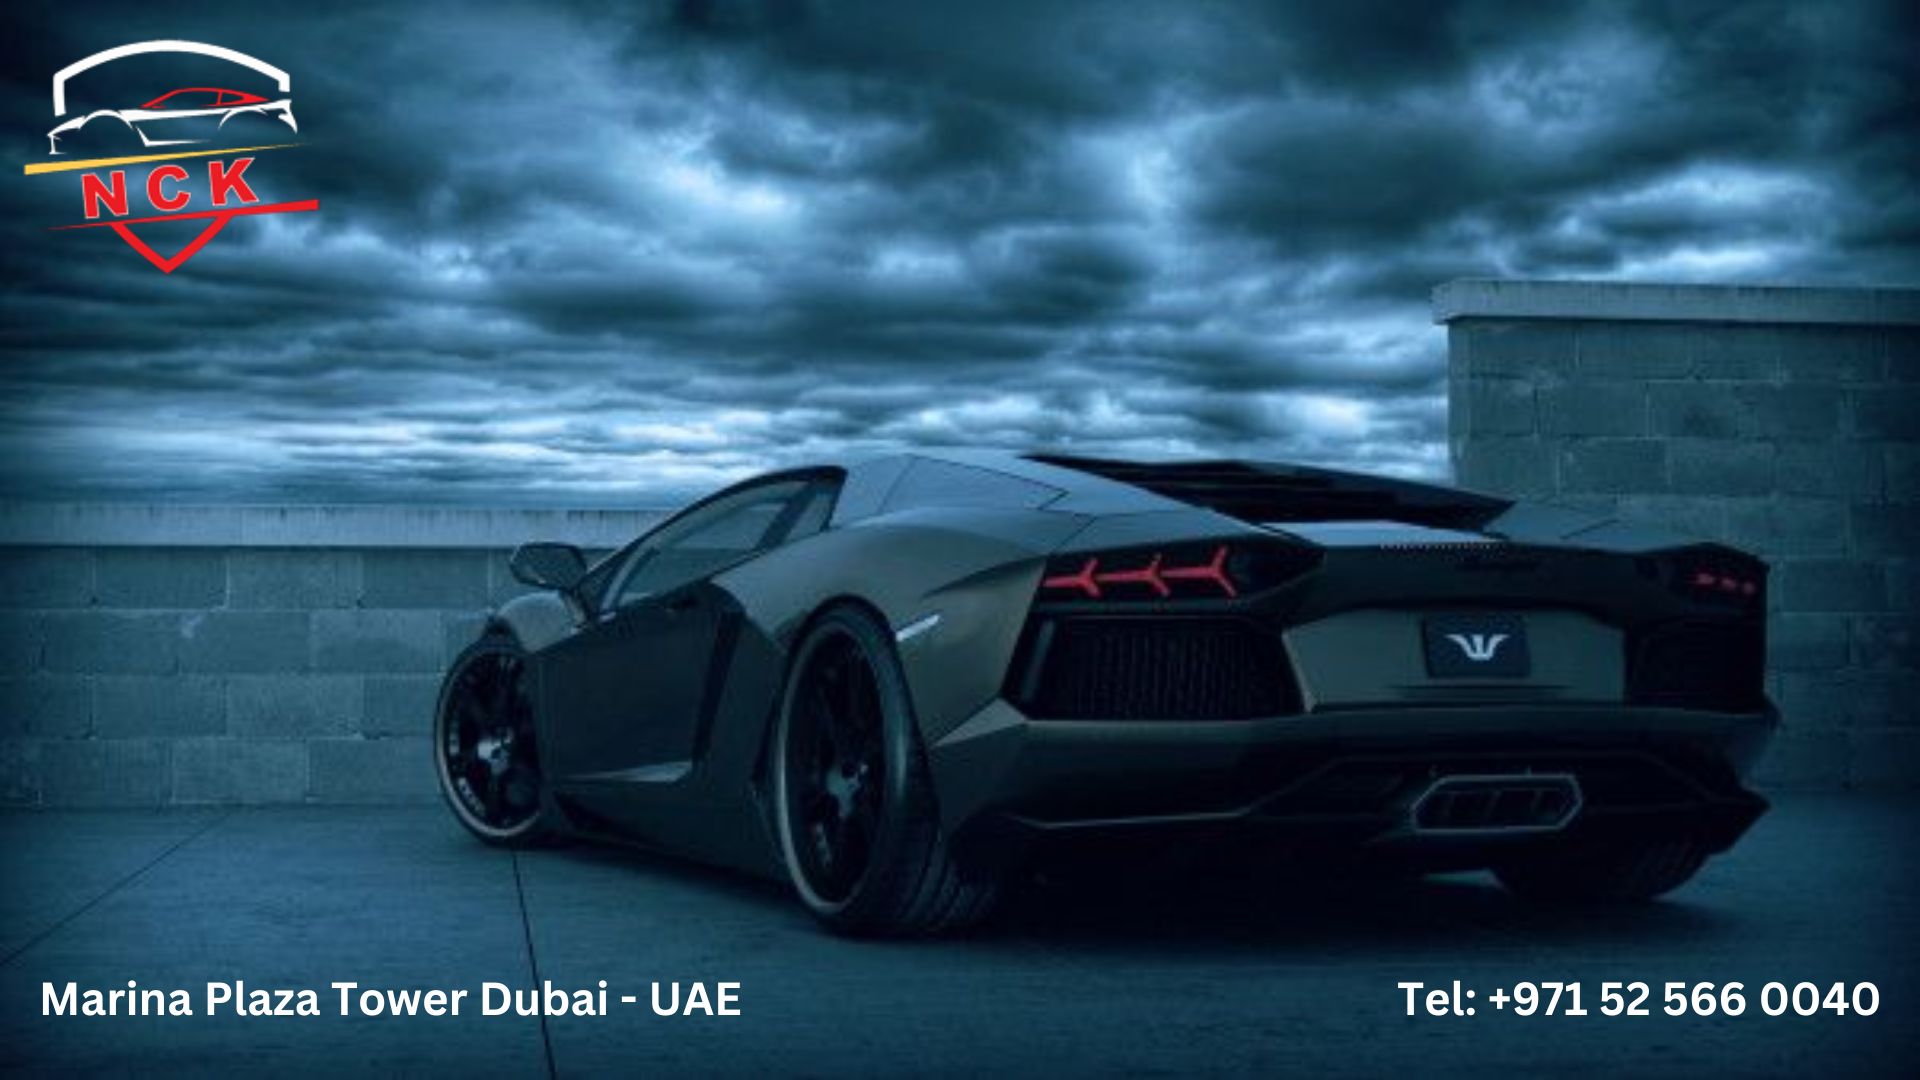 Renting a Lamborghini in Dubai